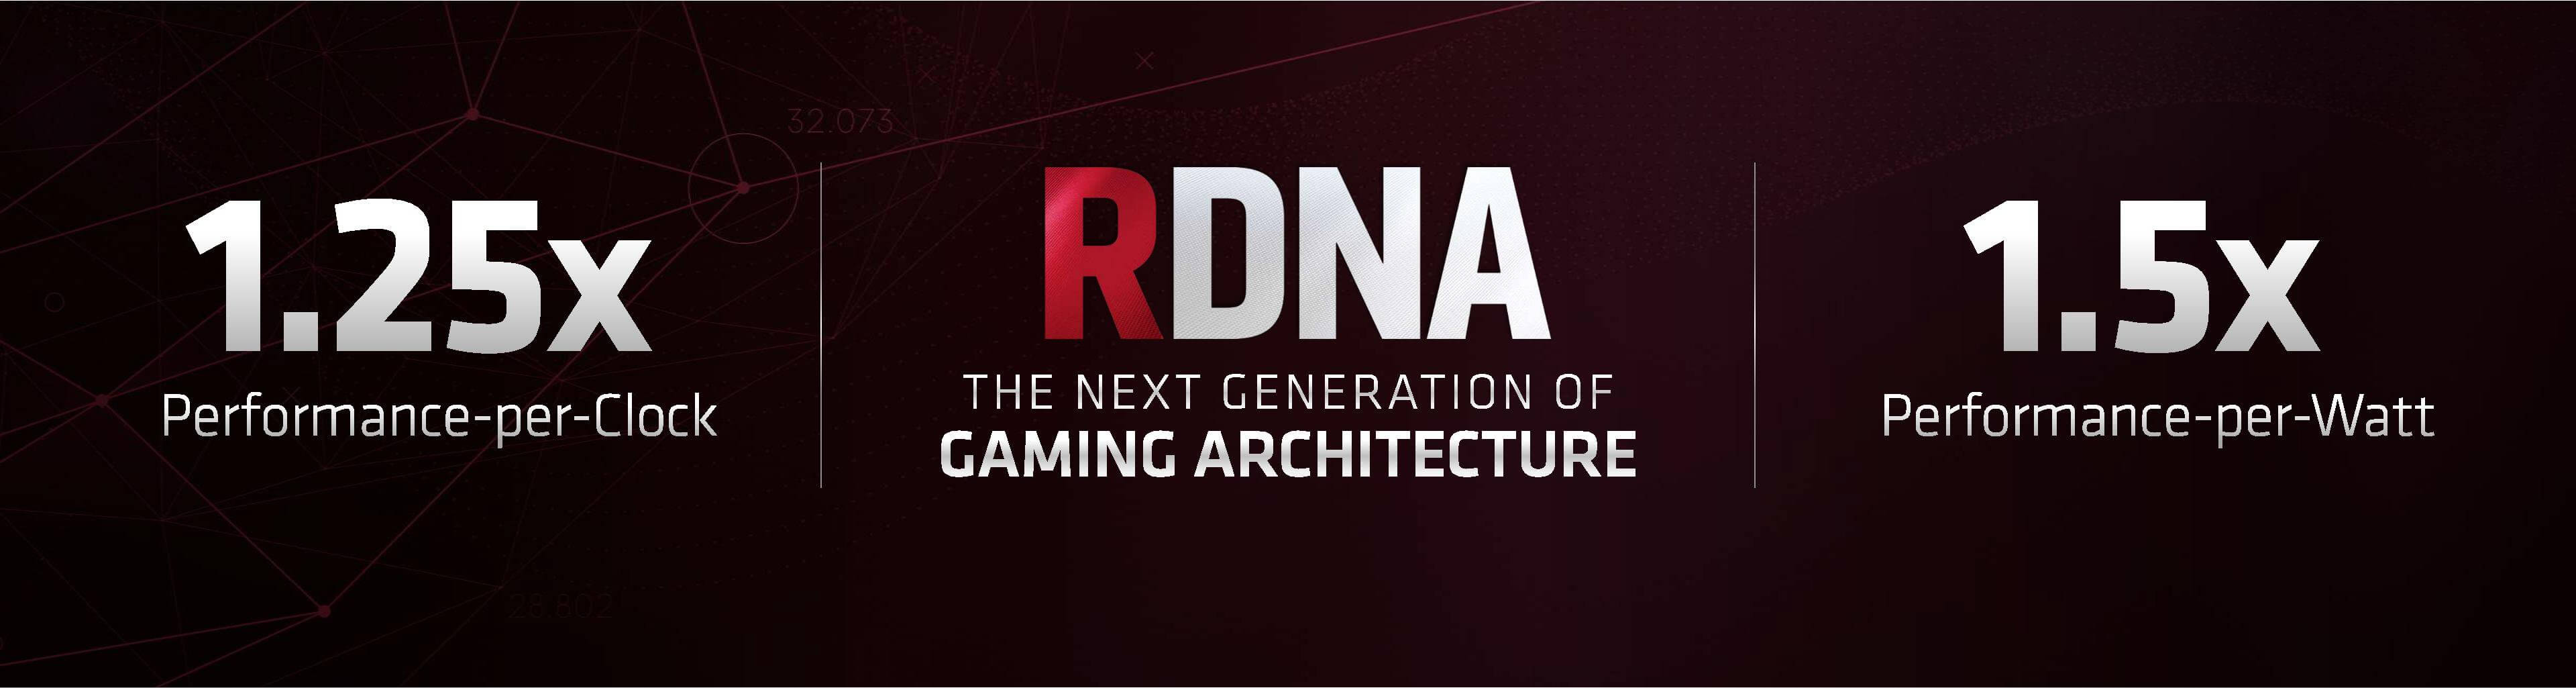 AMD-Navi-GPU-With-RDNA-Architecture